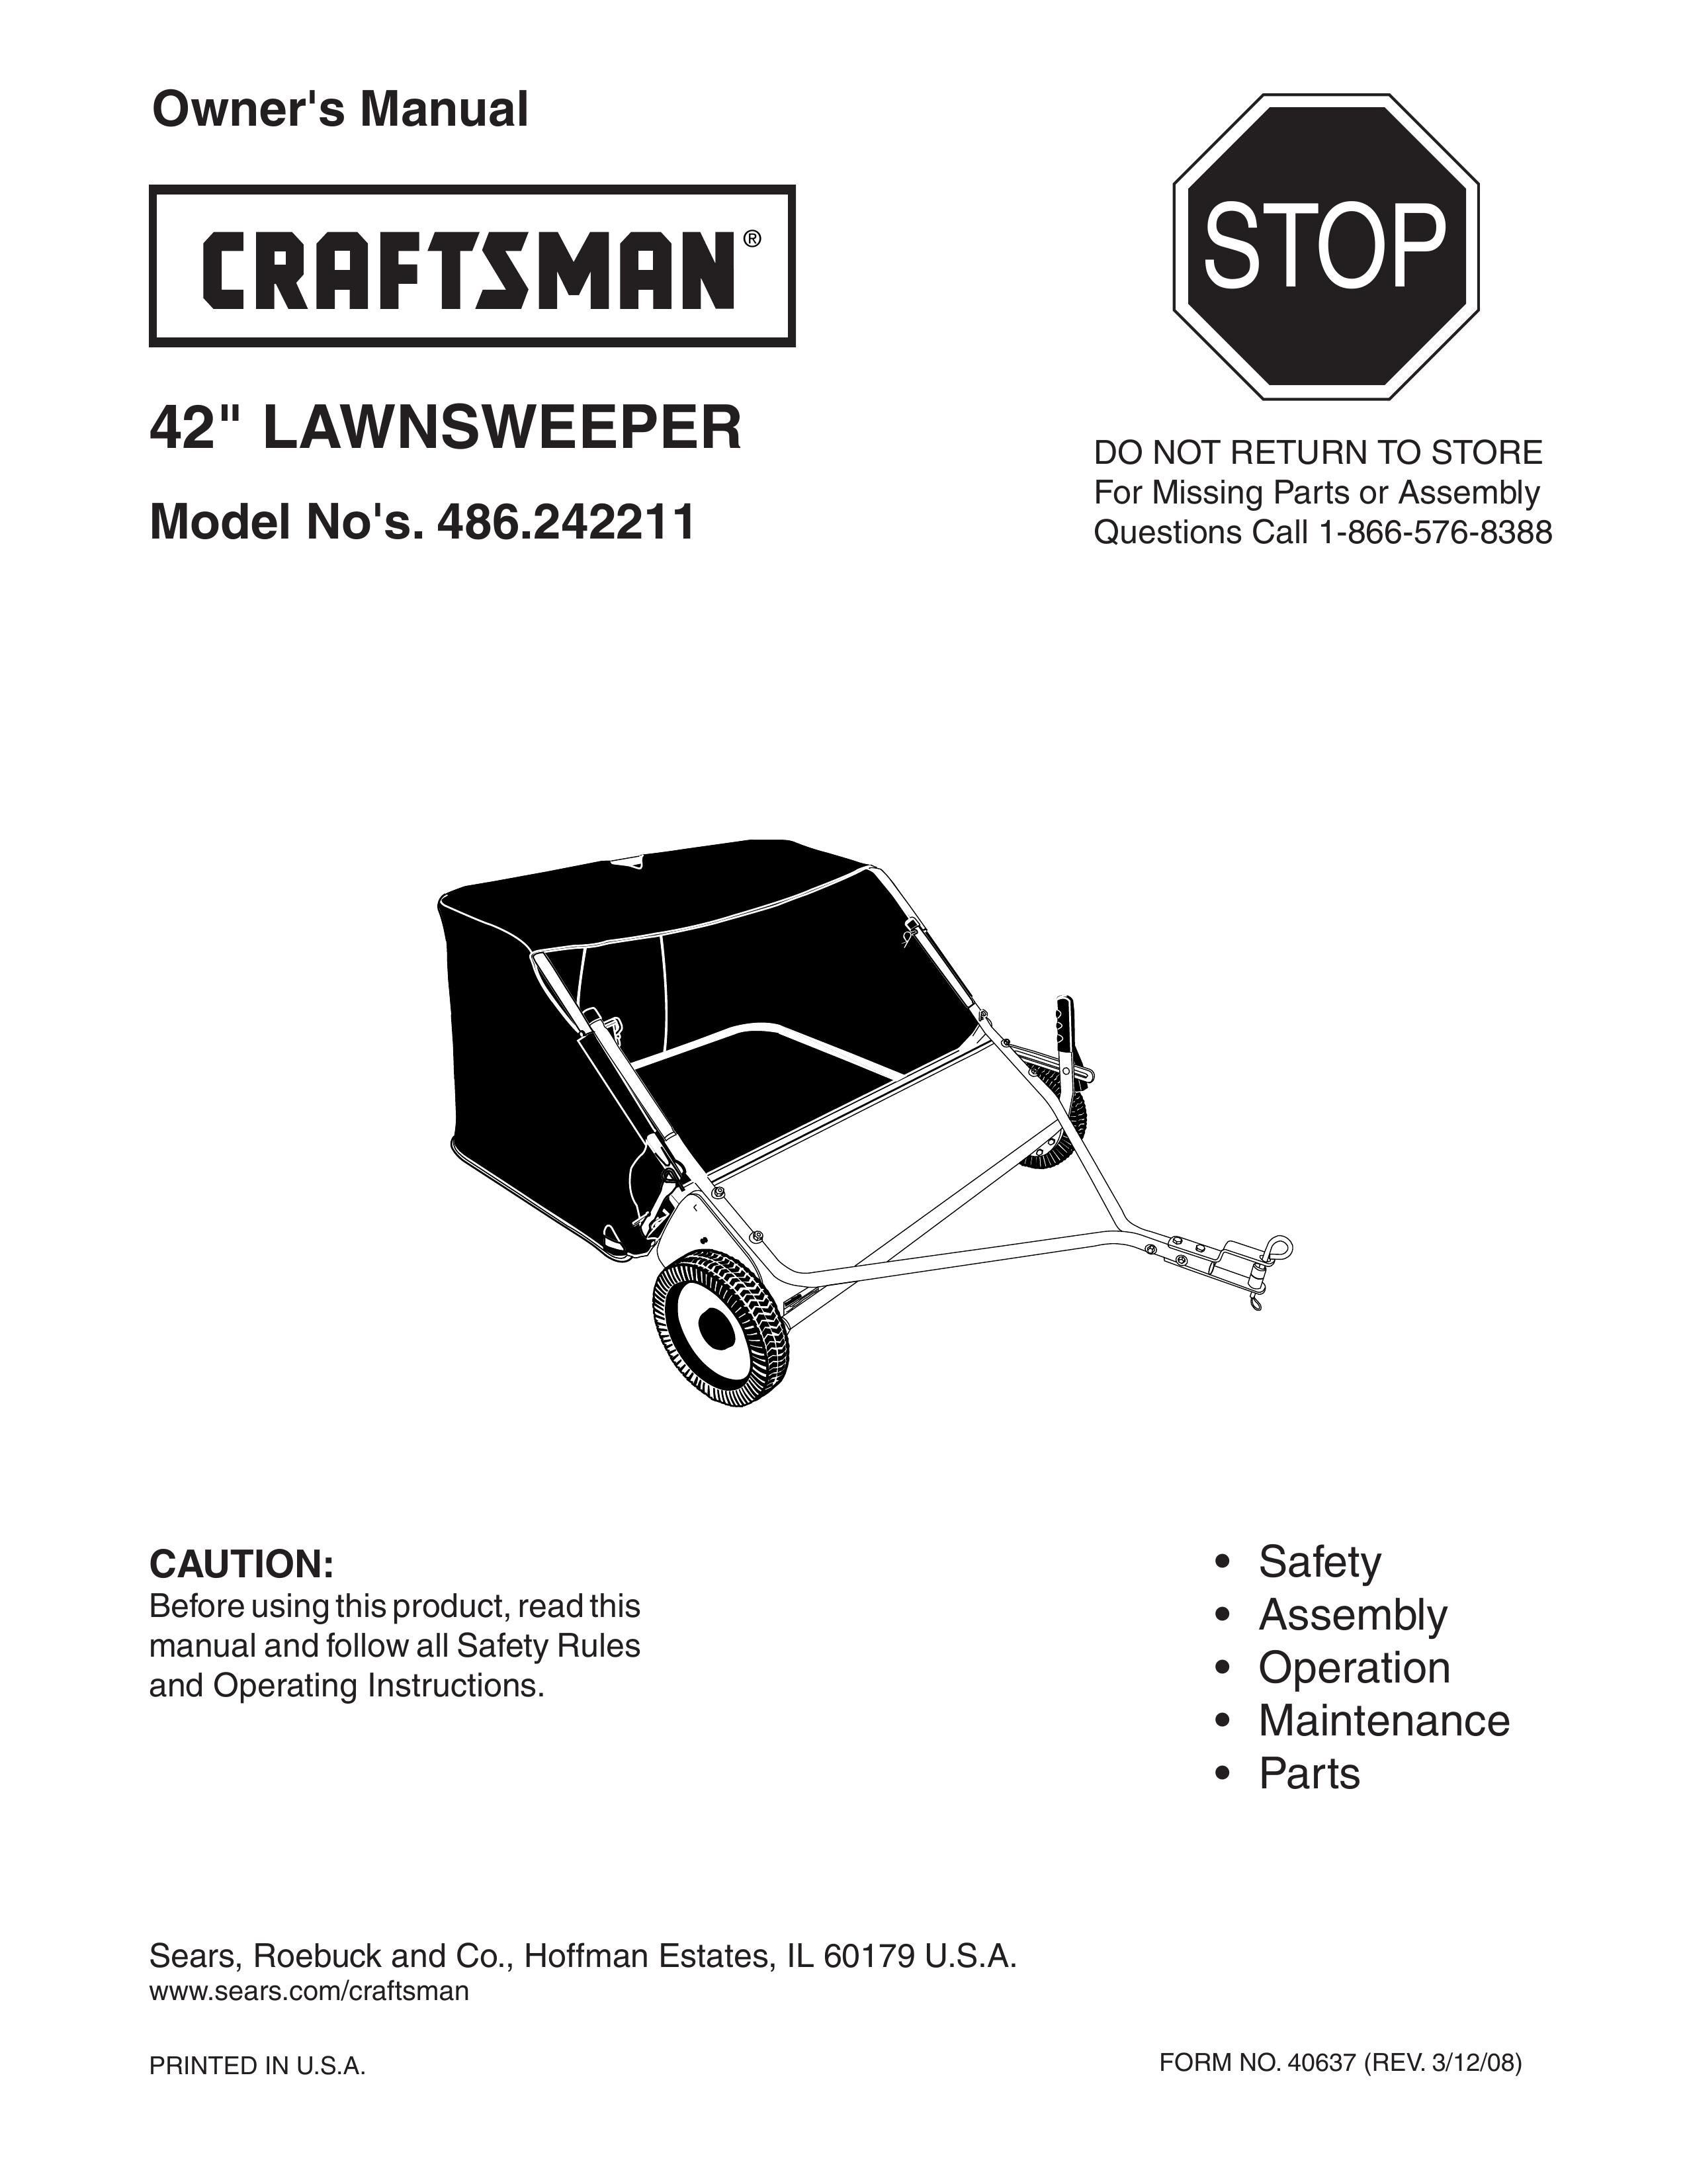 Craftsman 486.242211 Lawn Sweeper User Manual